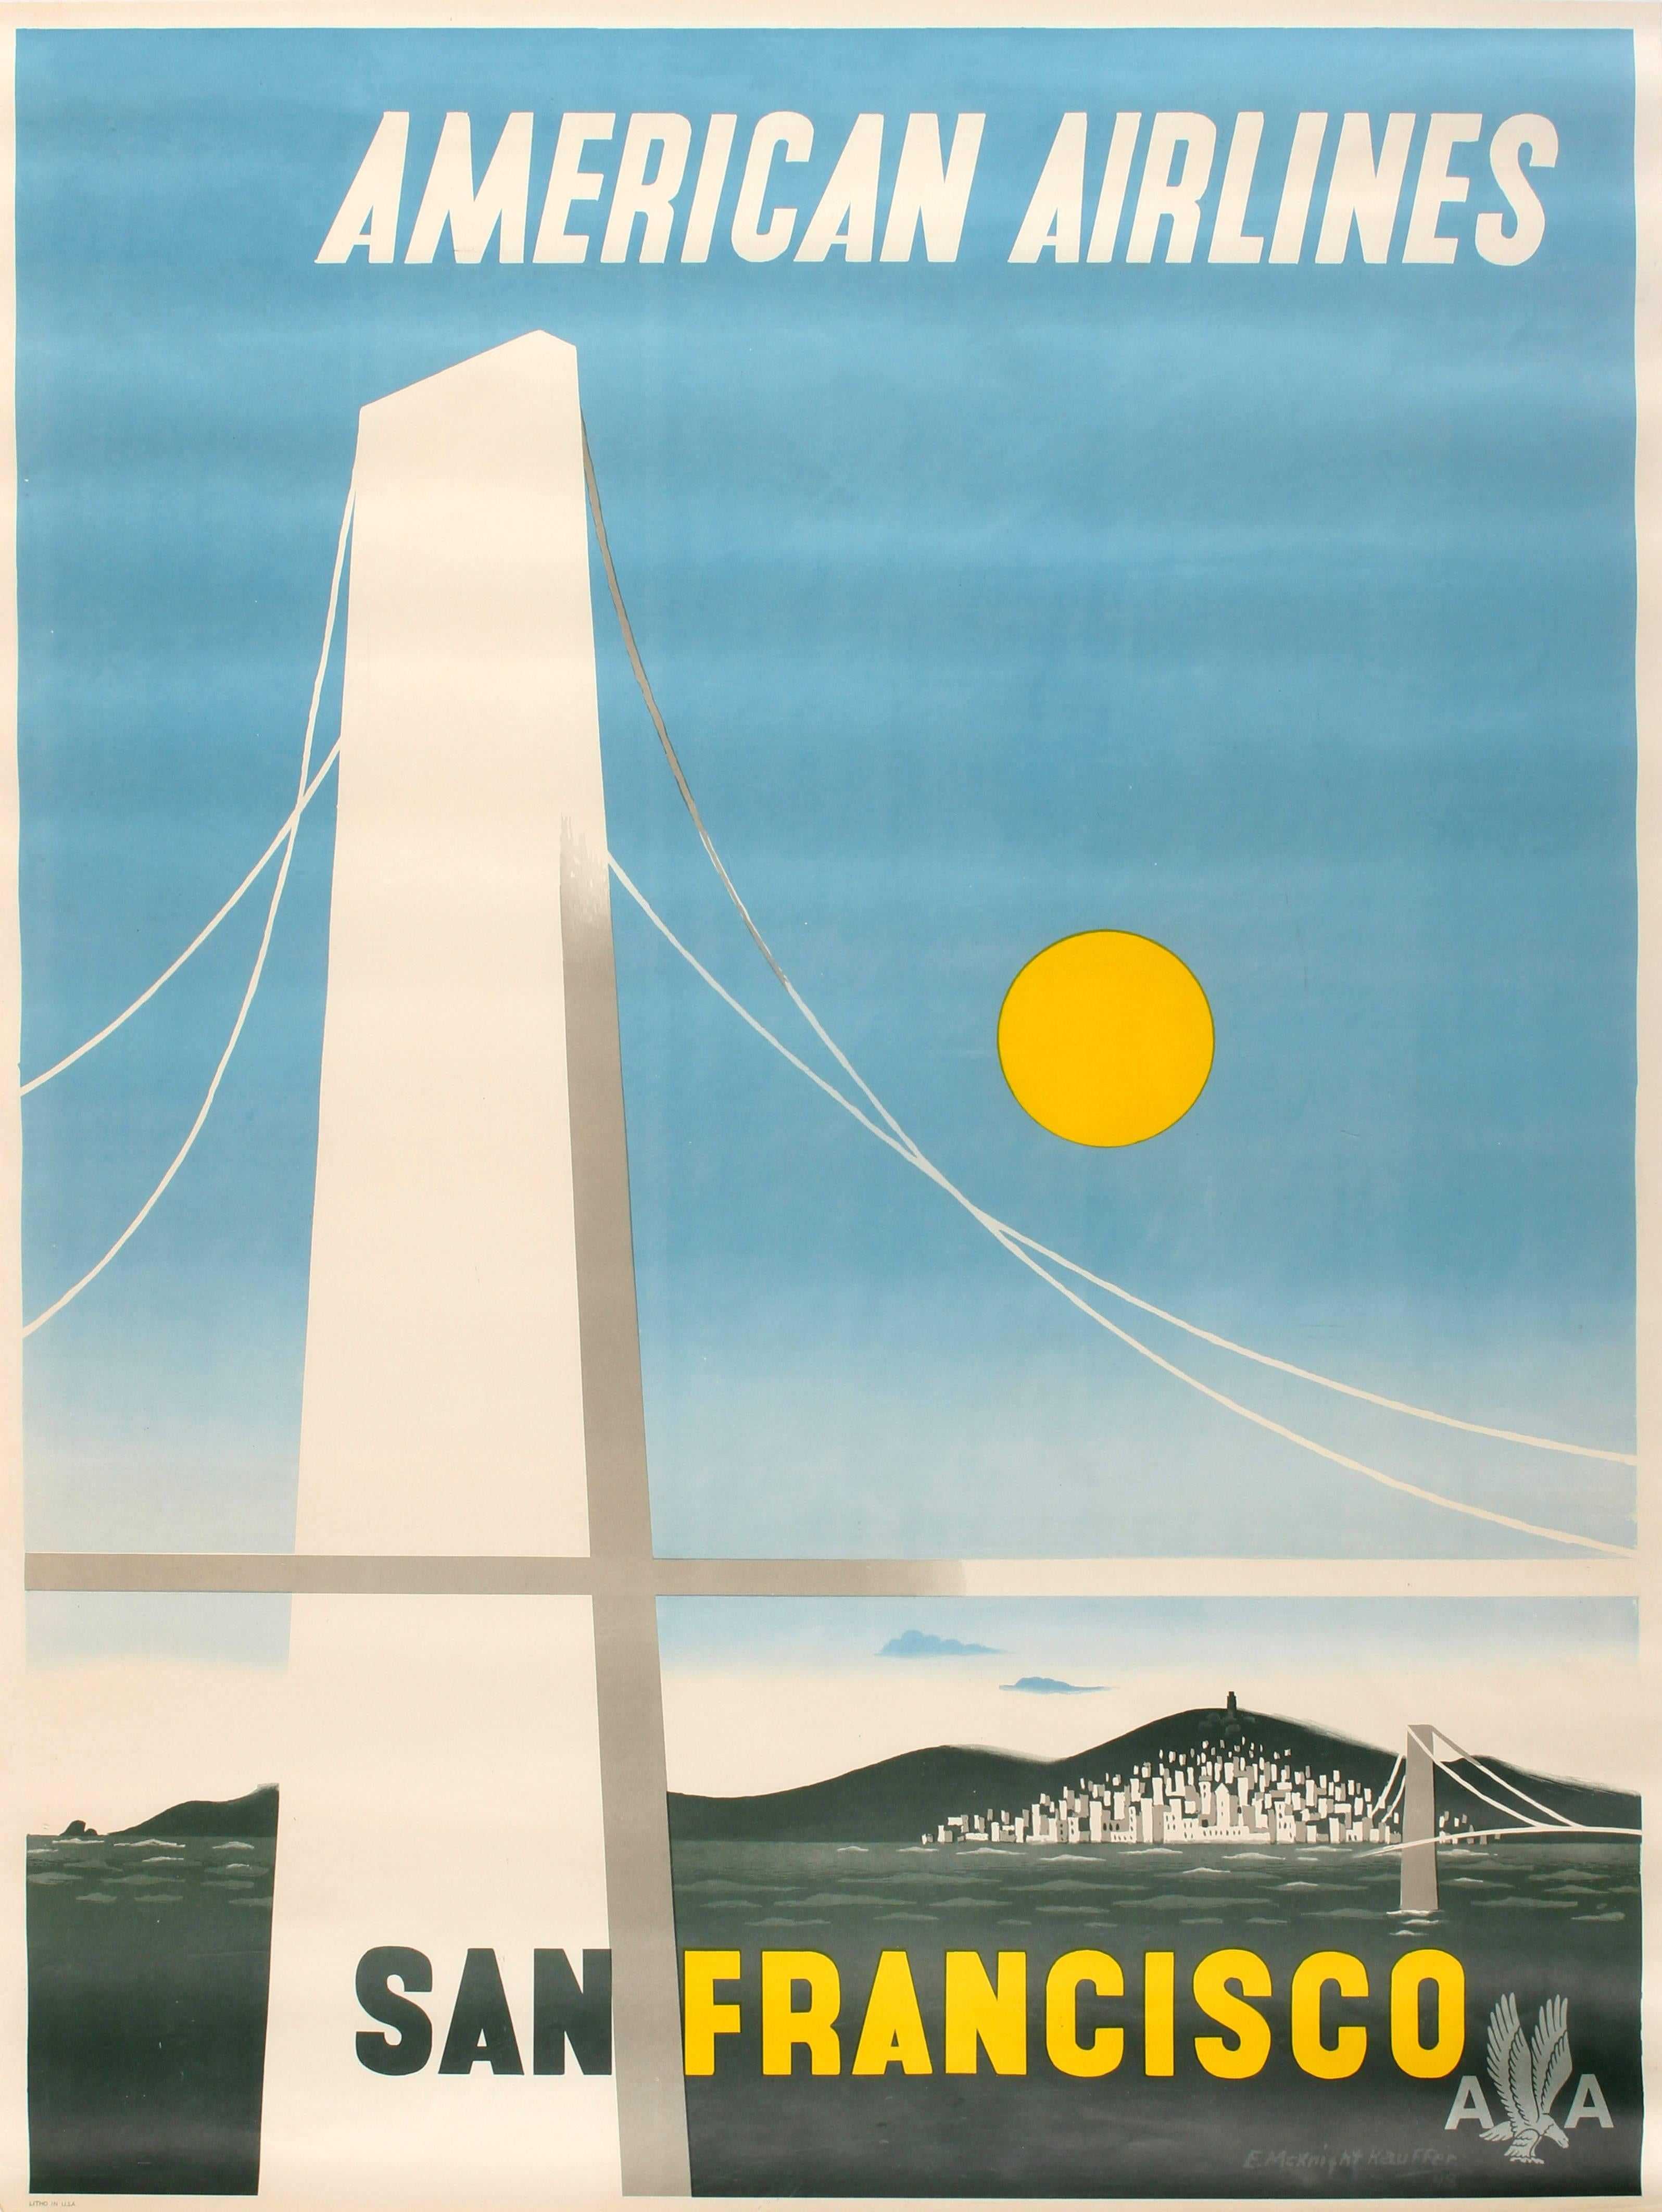 Edward McKnight Kauffer Print - Original Vintage American Airlines Travel Advertising Poster For San Francisco